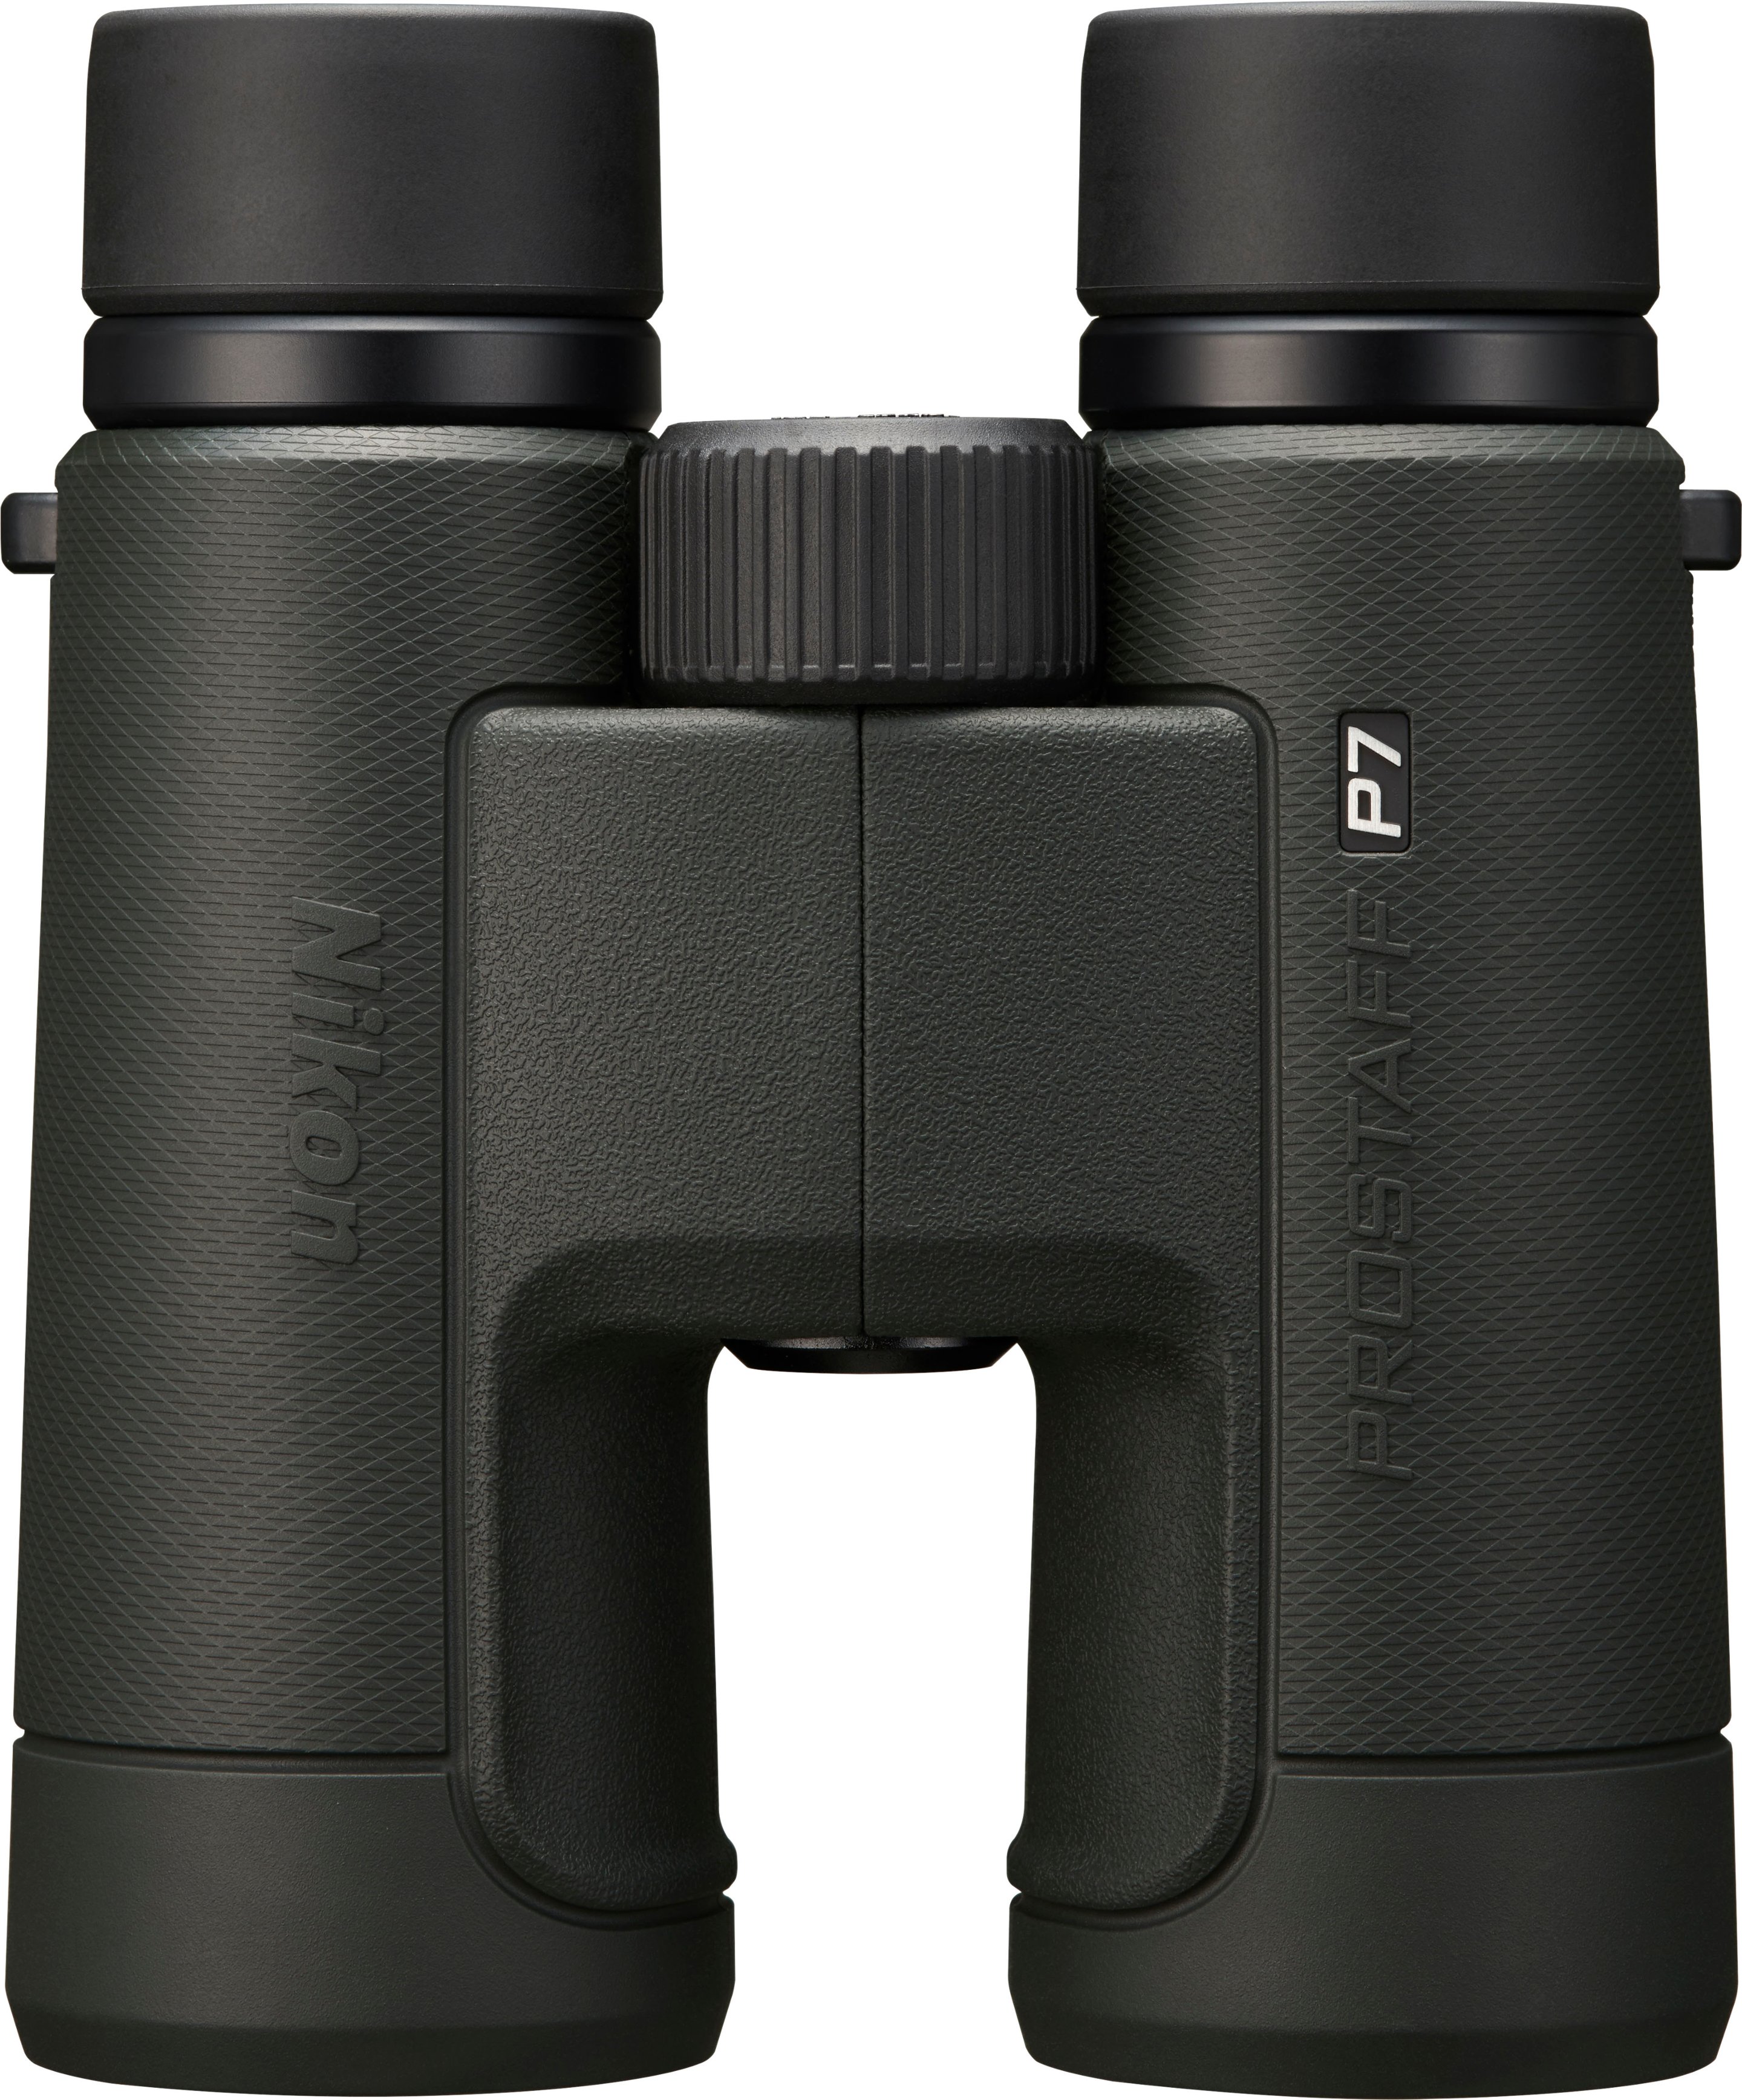 Angle View: Nikon - PROSTAFF P7 8X42 Waterproof Binoculars - Green